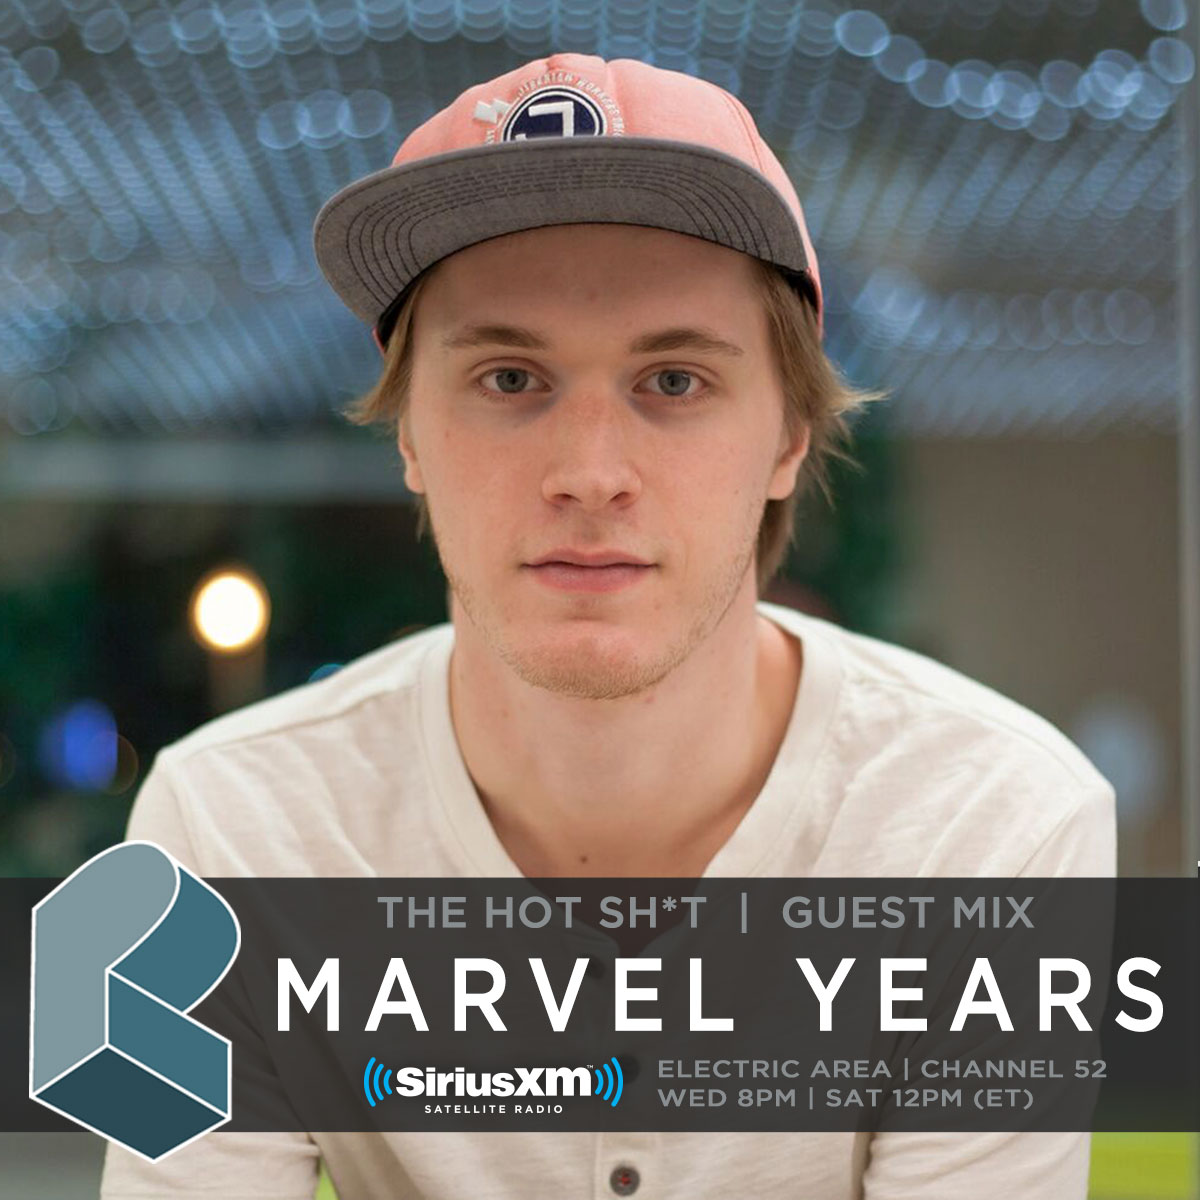 Tonight on Sirius XM! Marvel Years